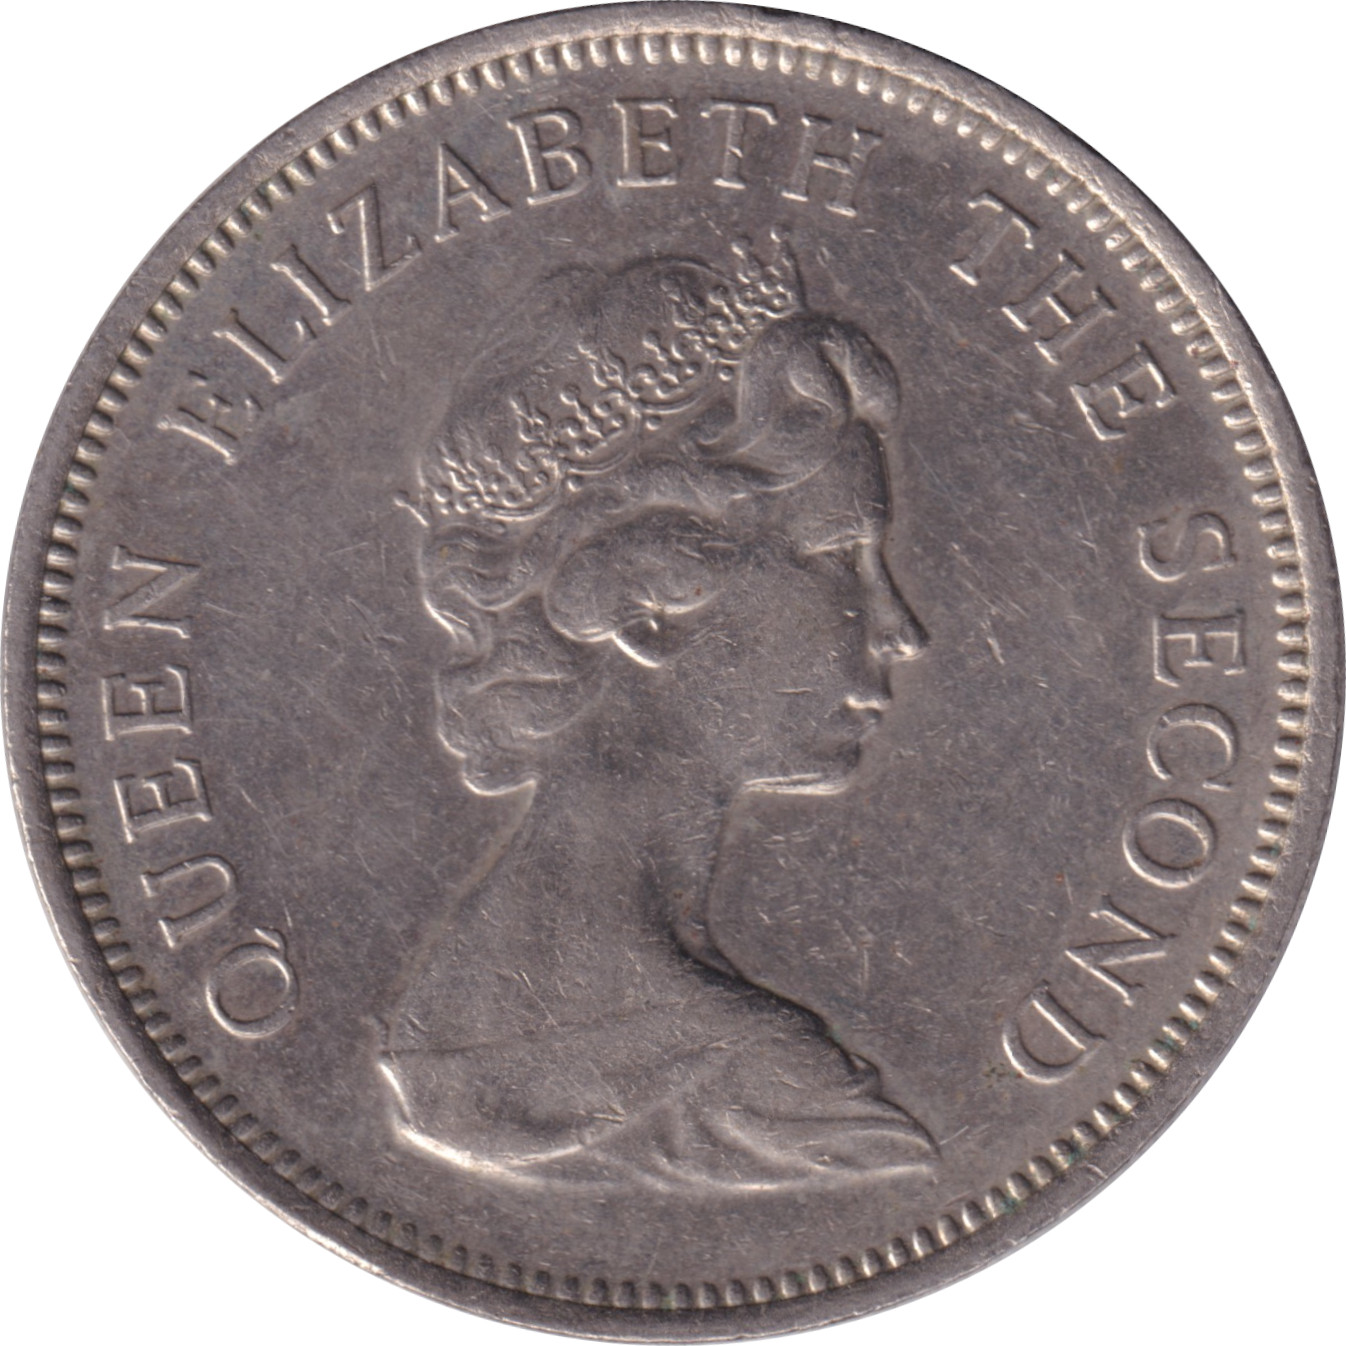 10 pence - Elizabeth II - Buste jeune - New Pence